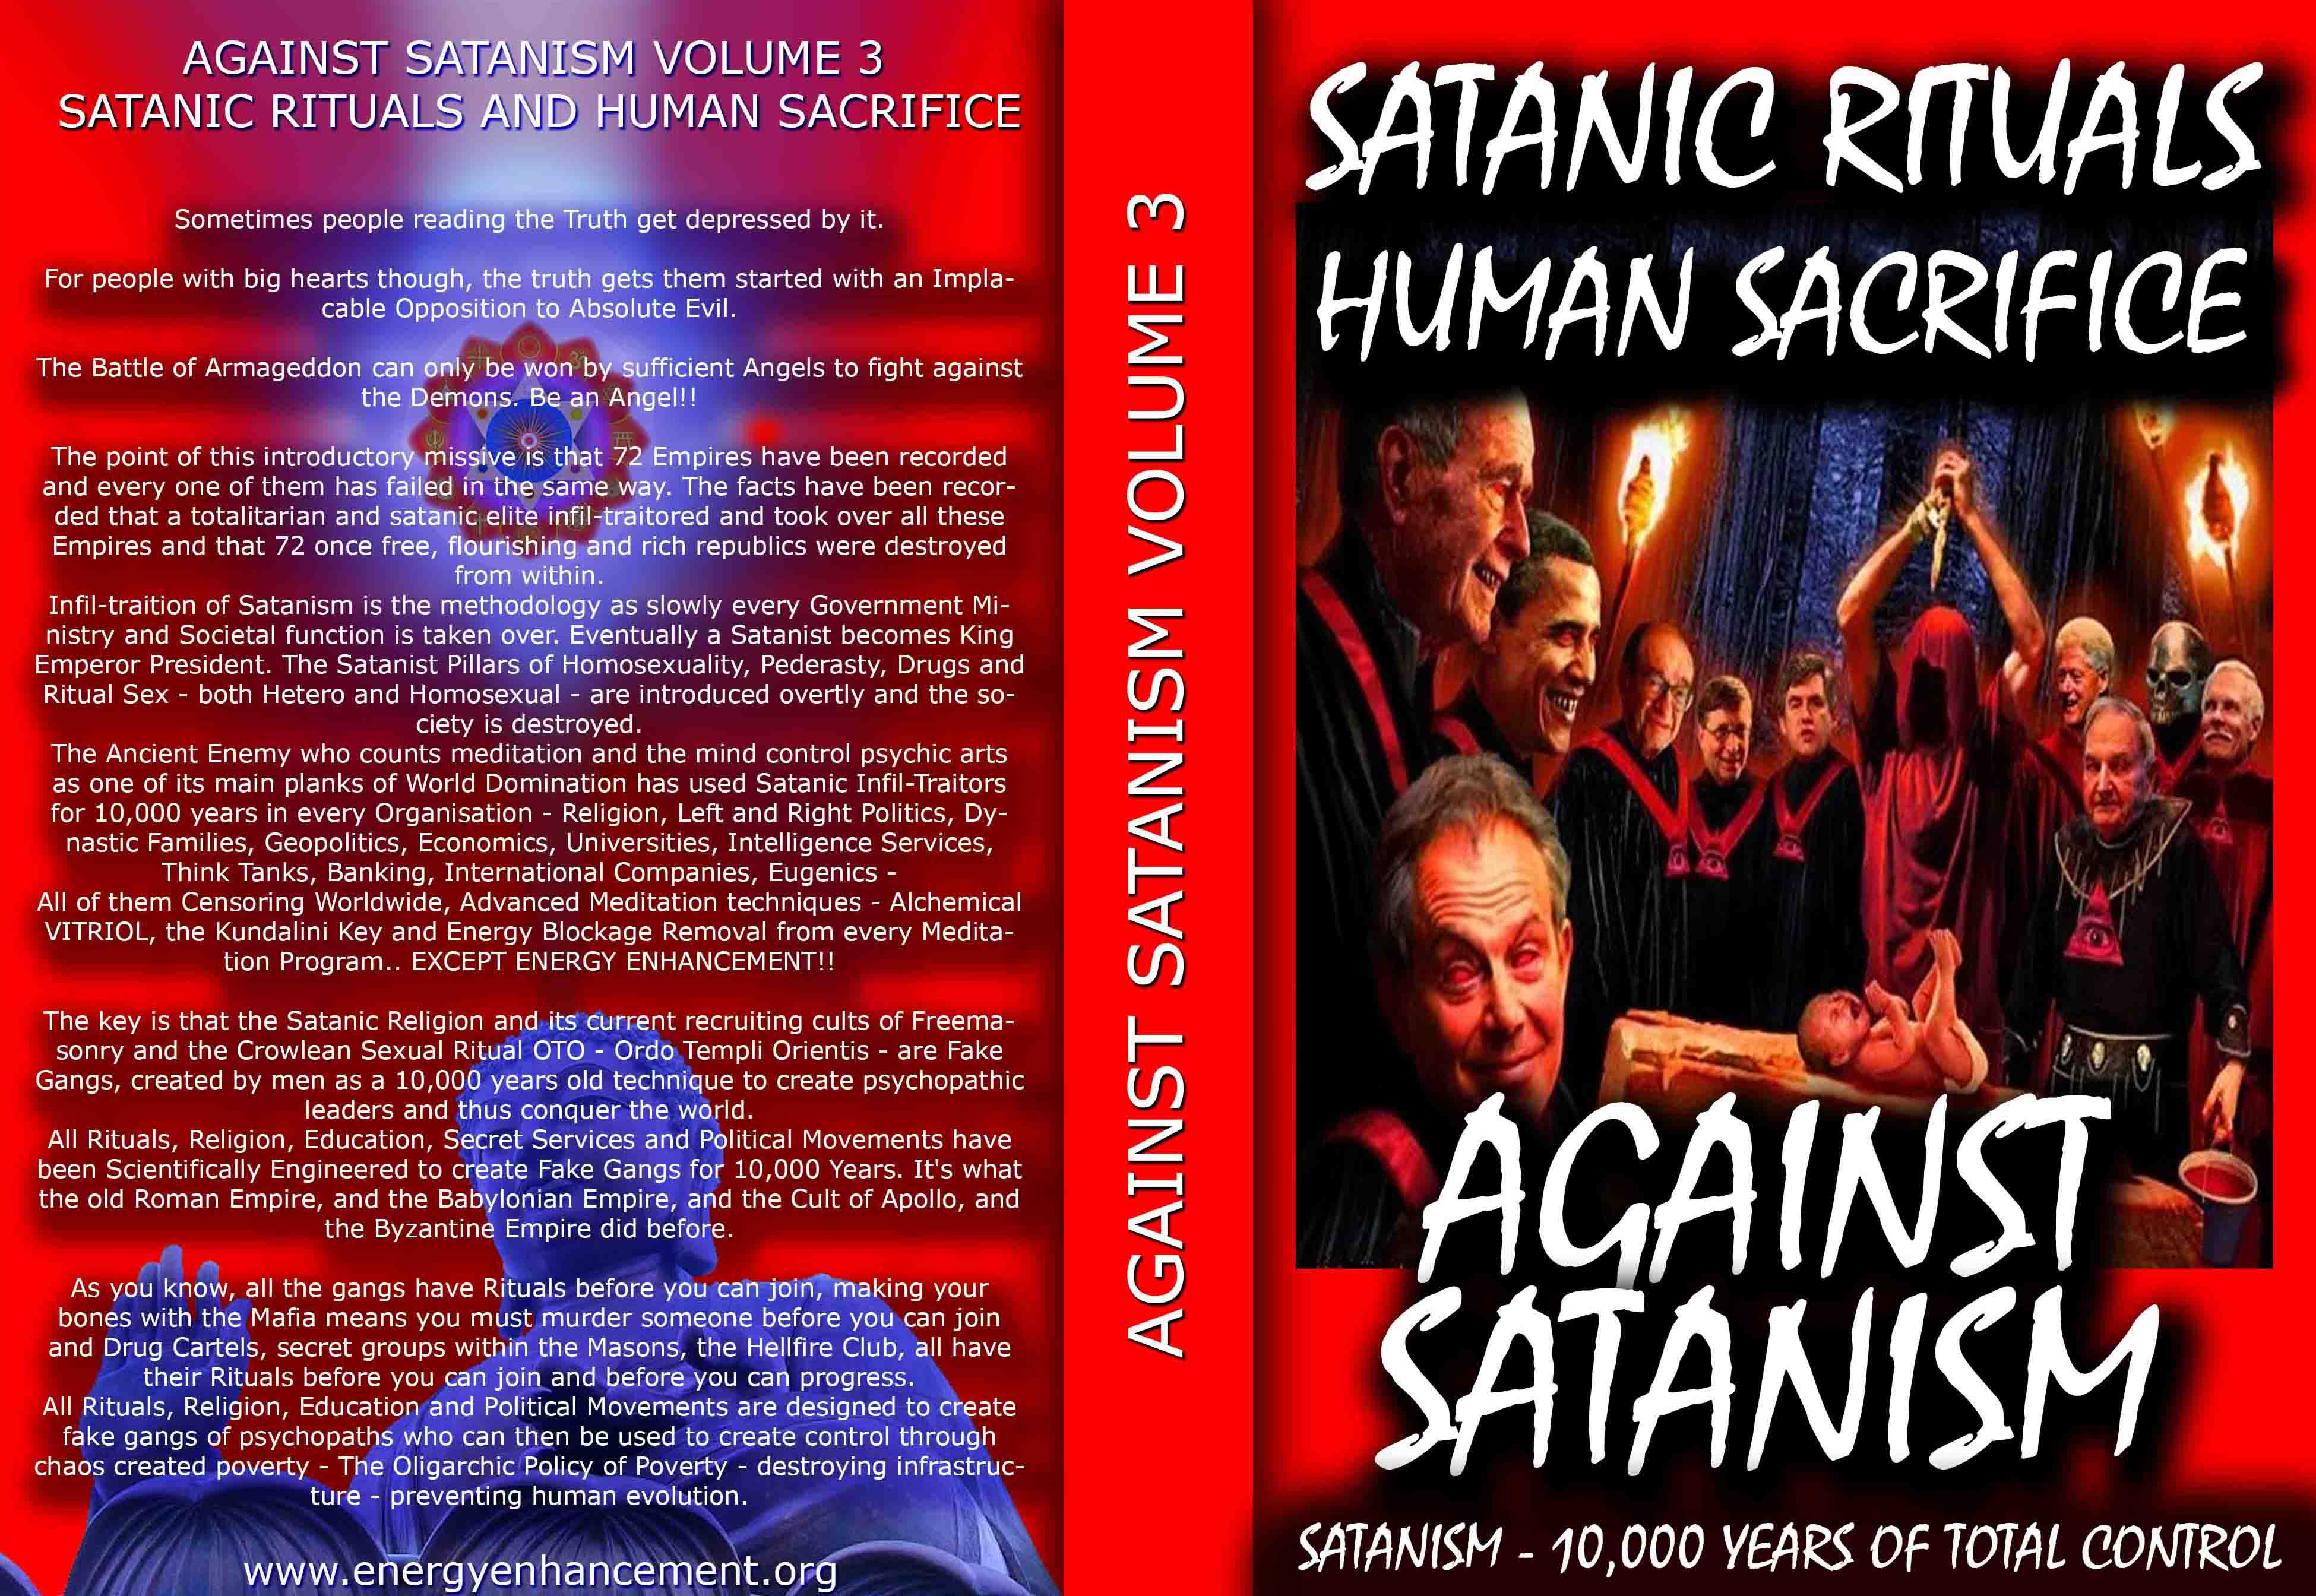 Description: Description: C:\wnew\Sacred-Energy\Against-Satanism-Volume-3\ANTI SATANIC 3.jpg